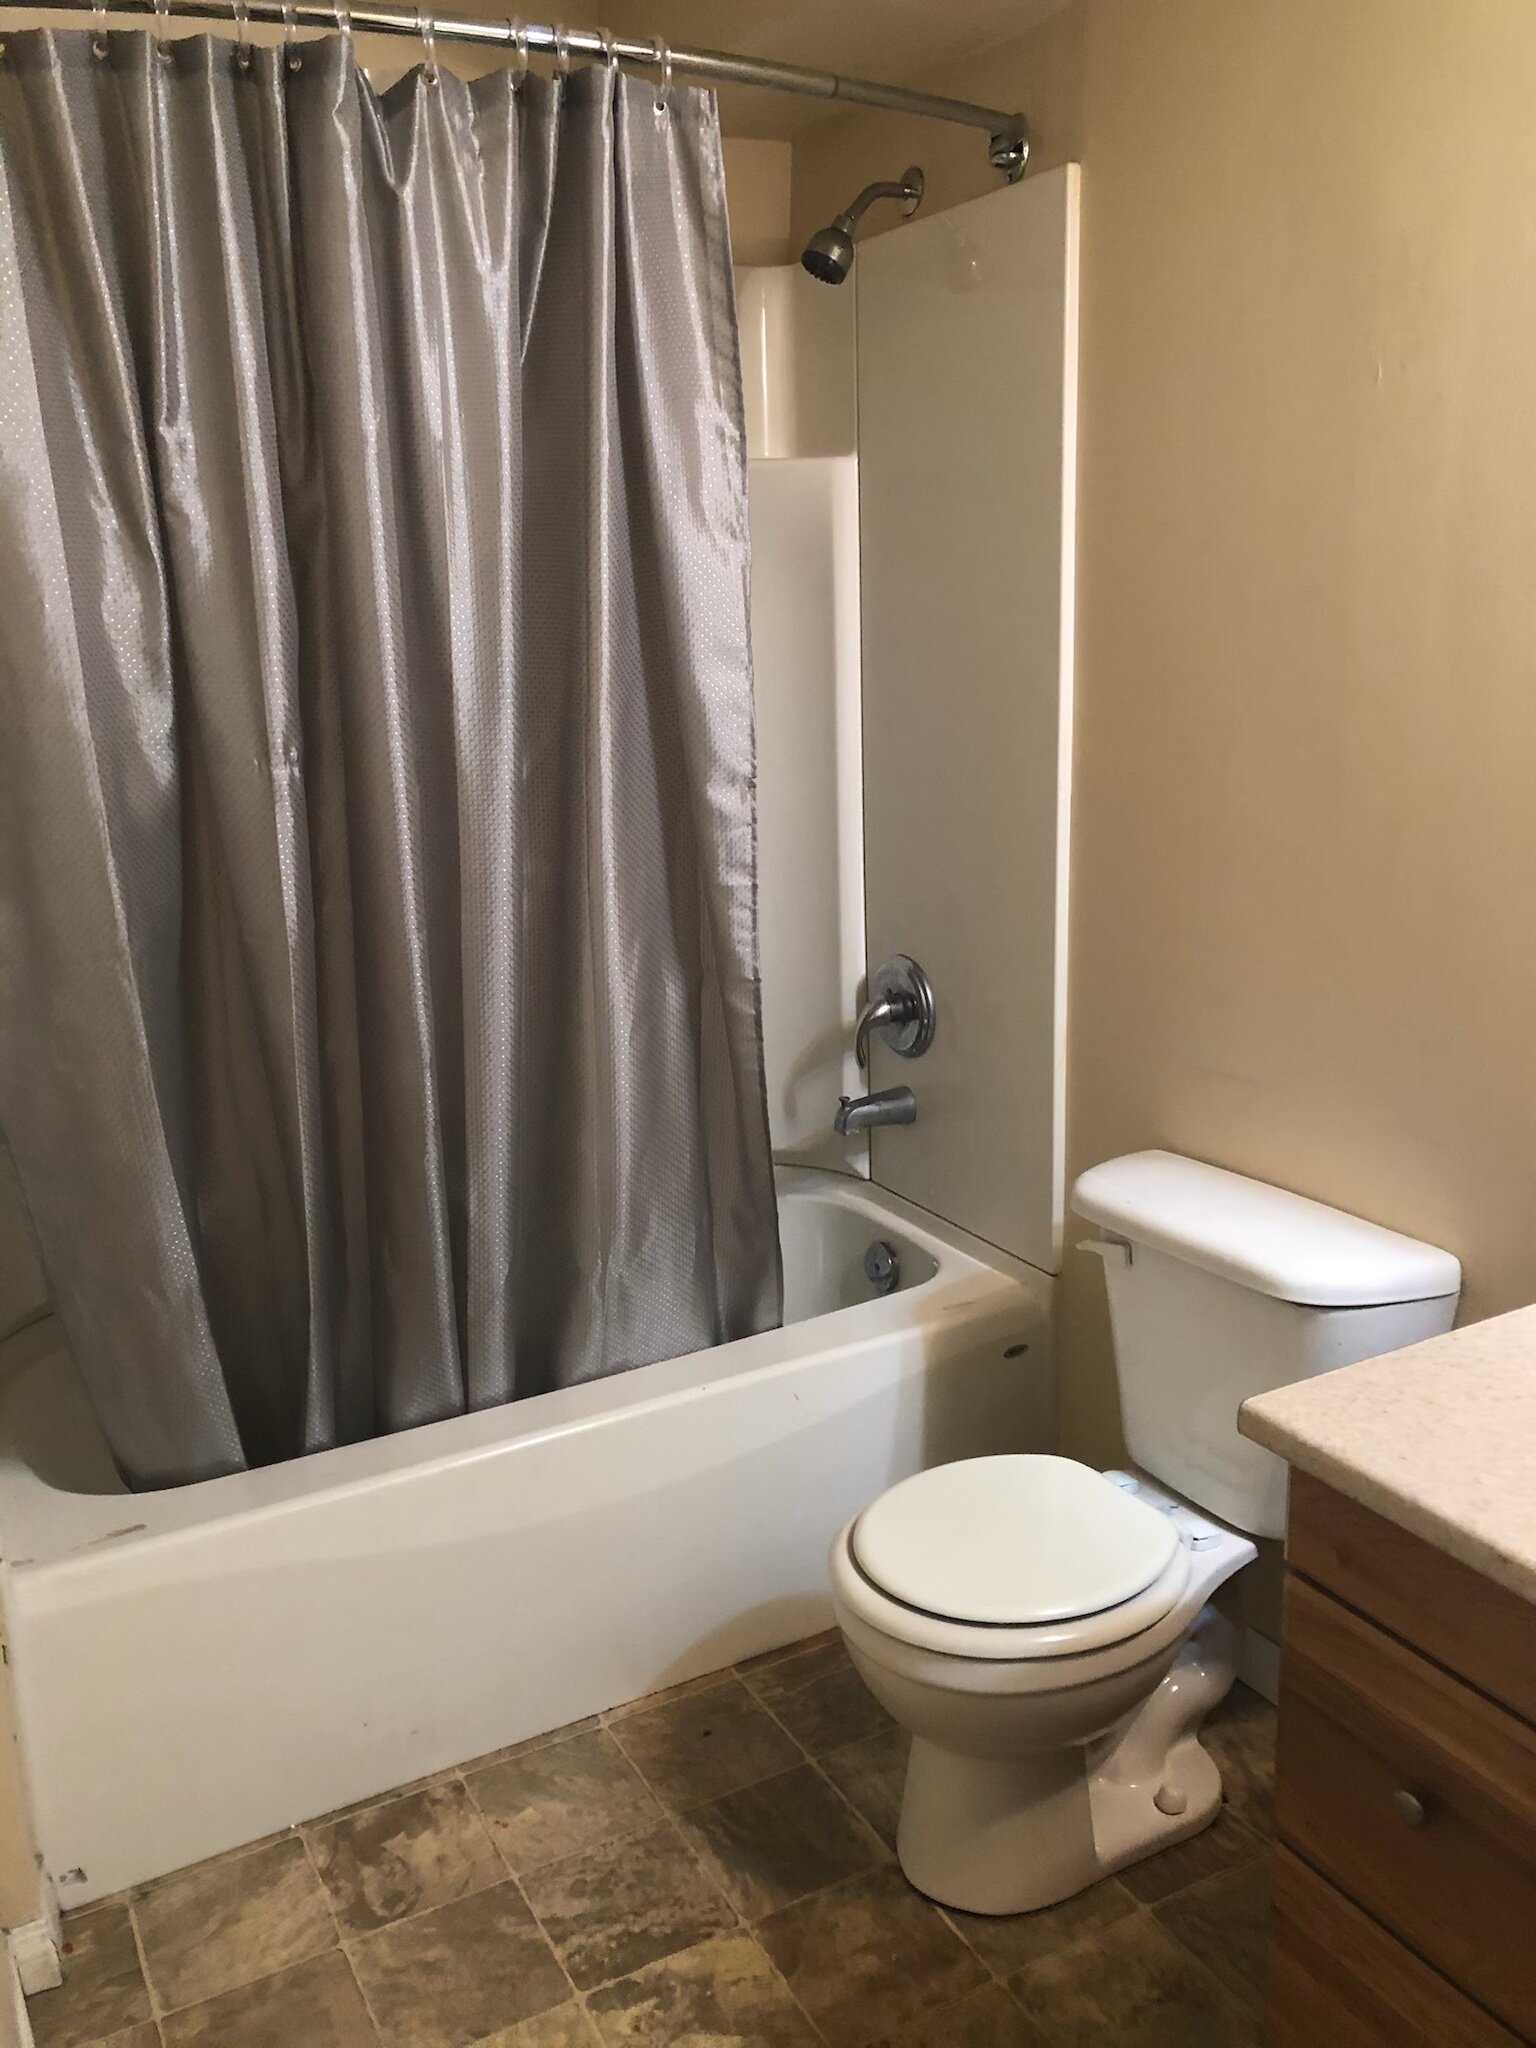 pinecrest-apartments-sparwood-bathroom-toilet-shower.jpg